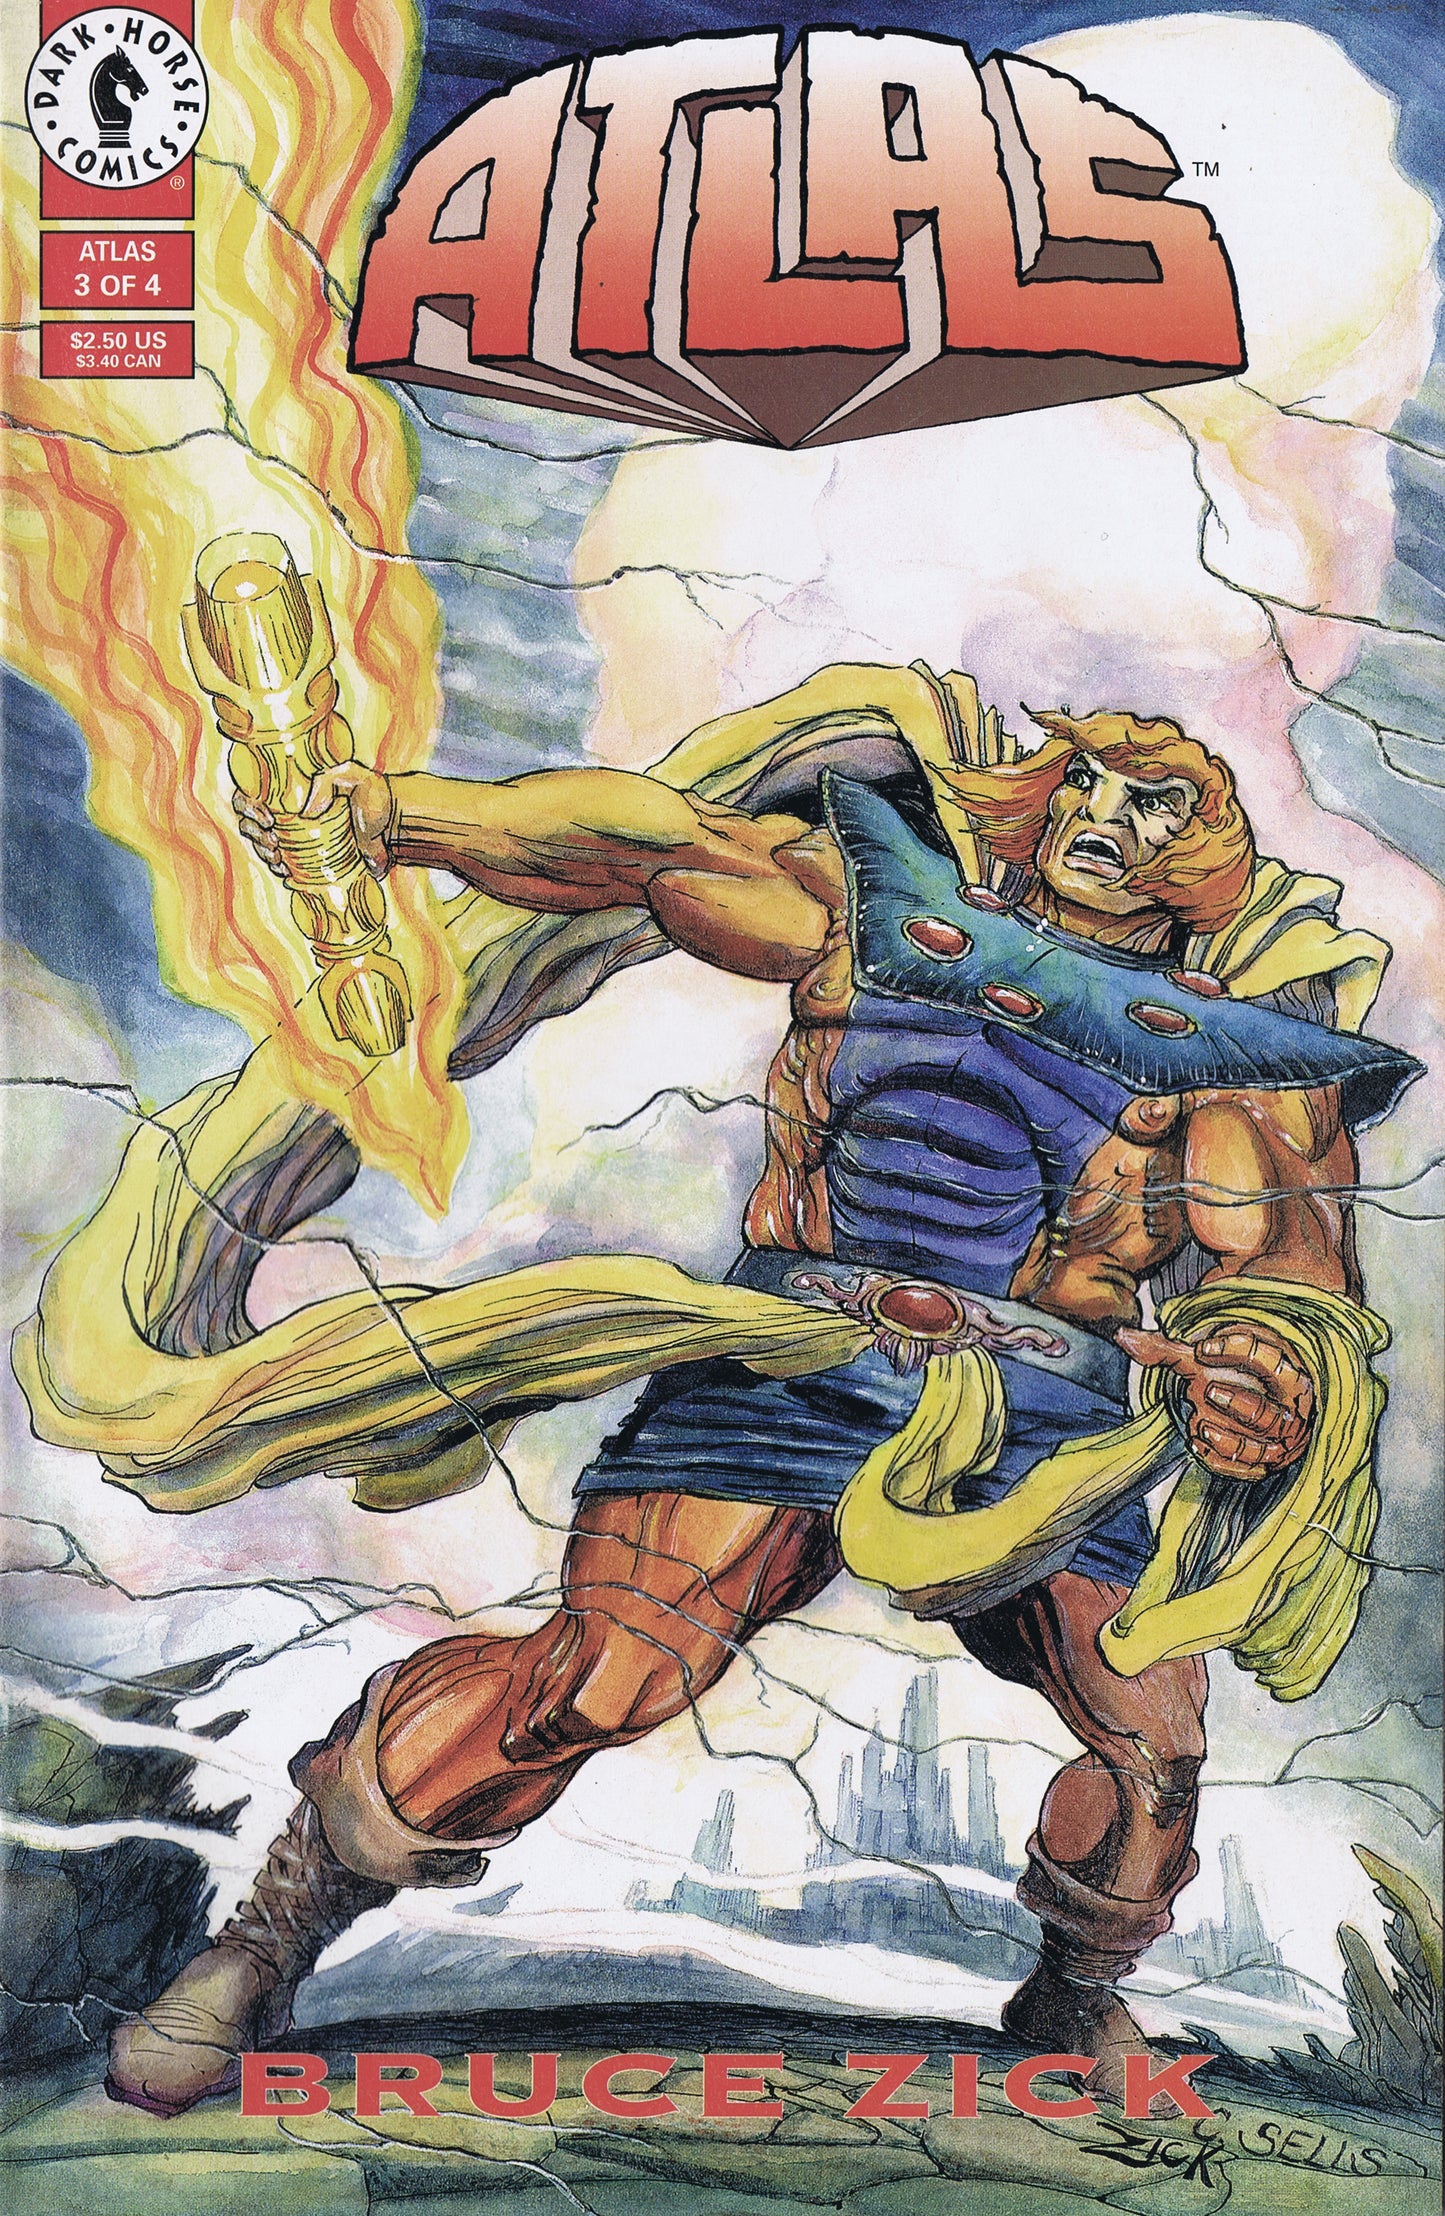 Atlas #3, Dark Horse Comics, 1994